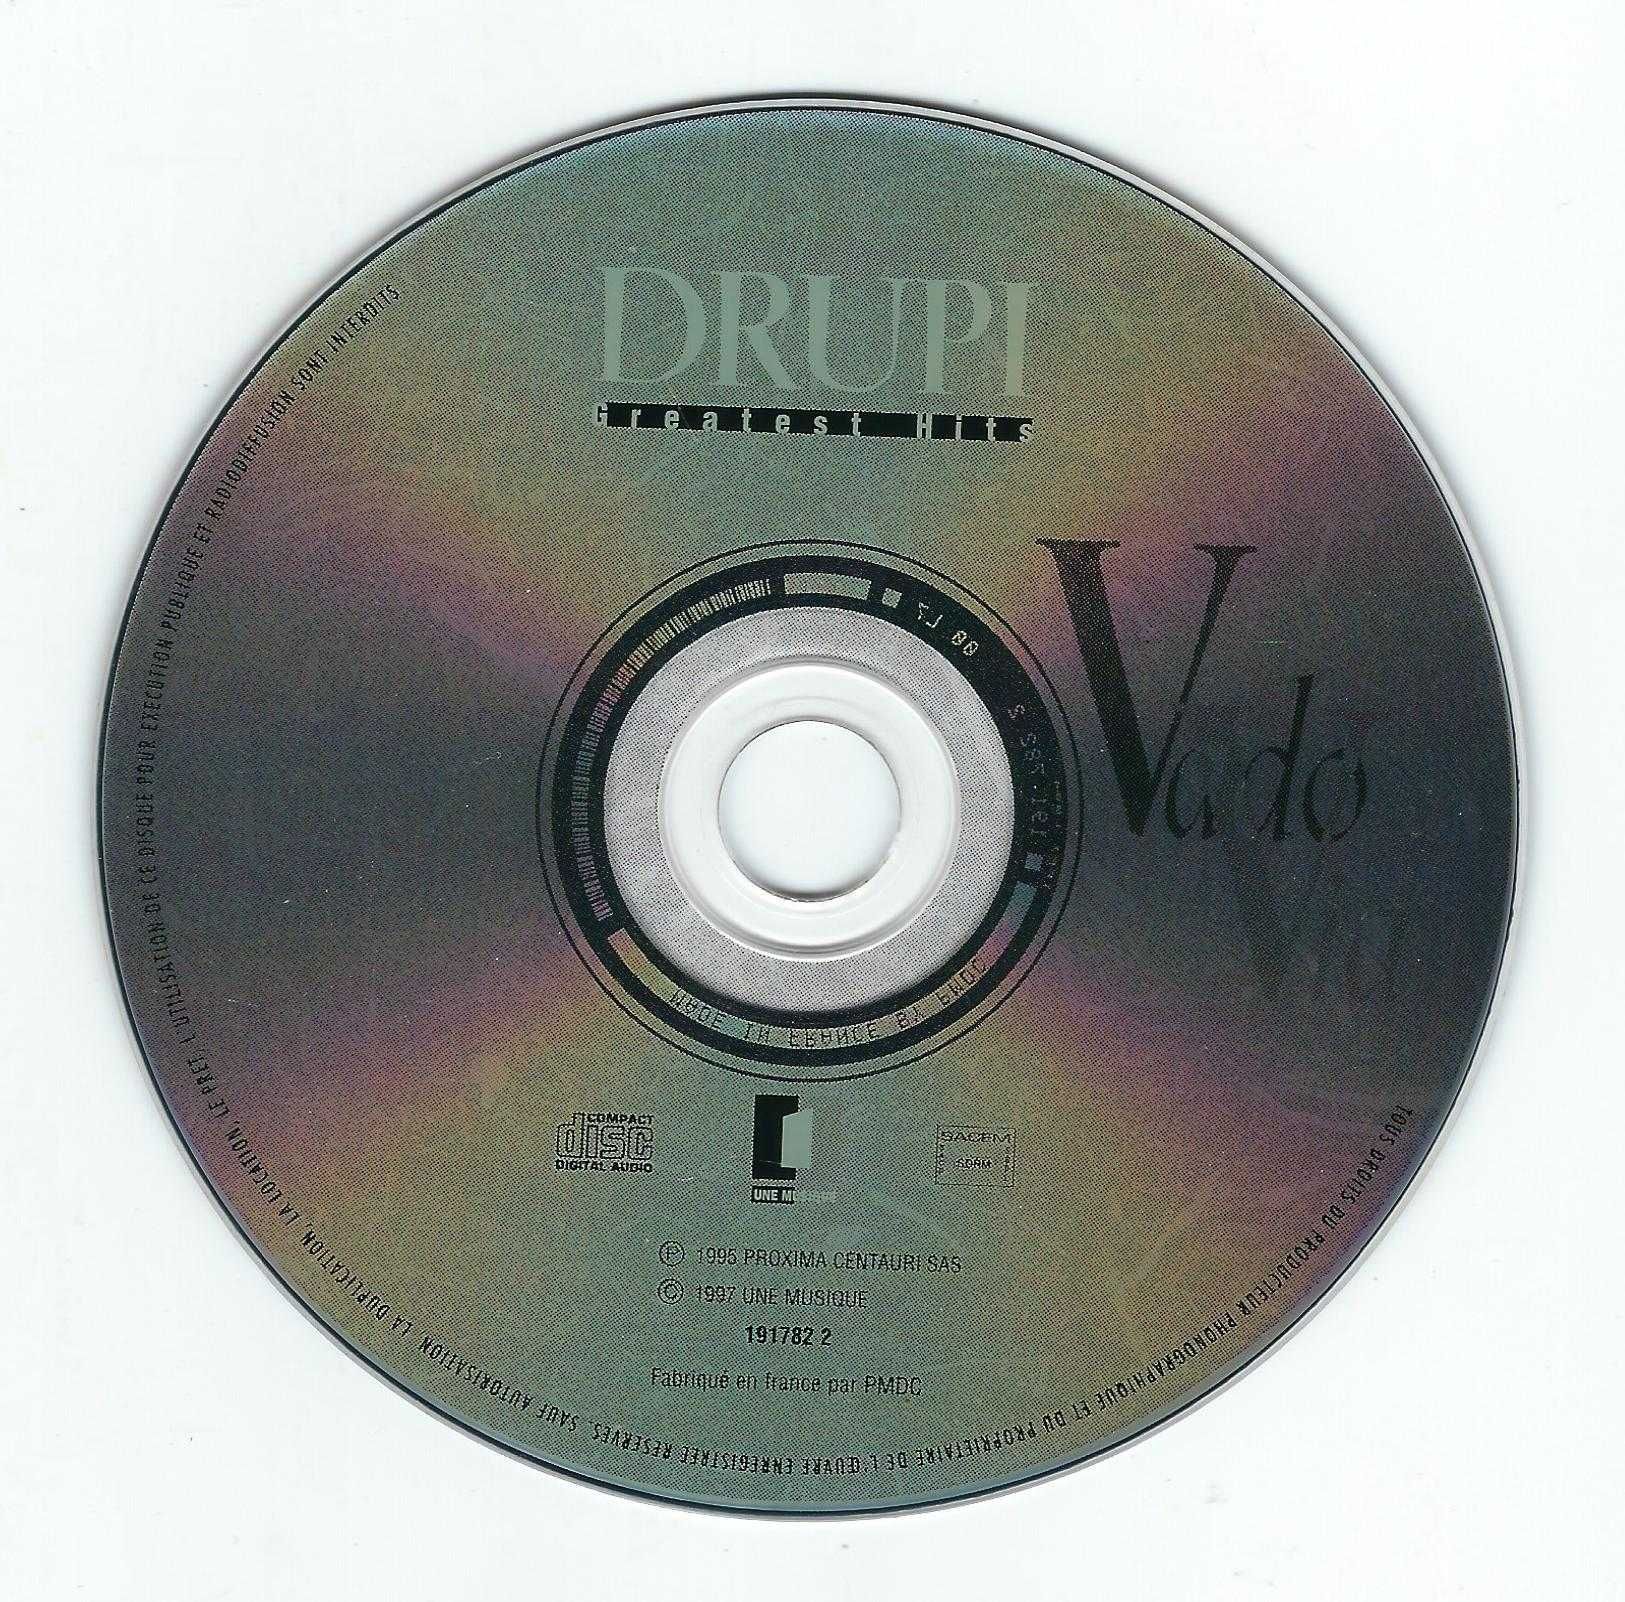 CD Drupi - Greatest Hits (1997) (PolyGram)